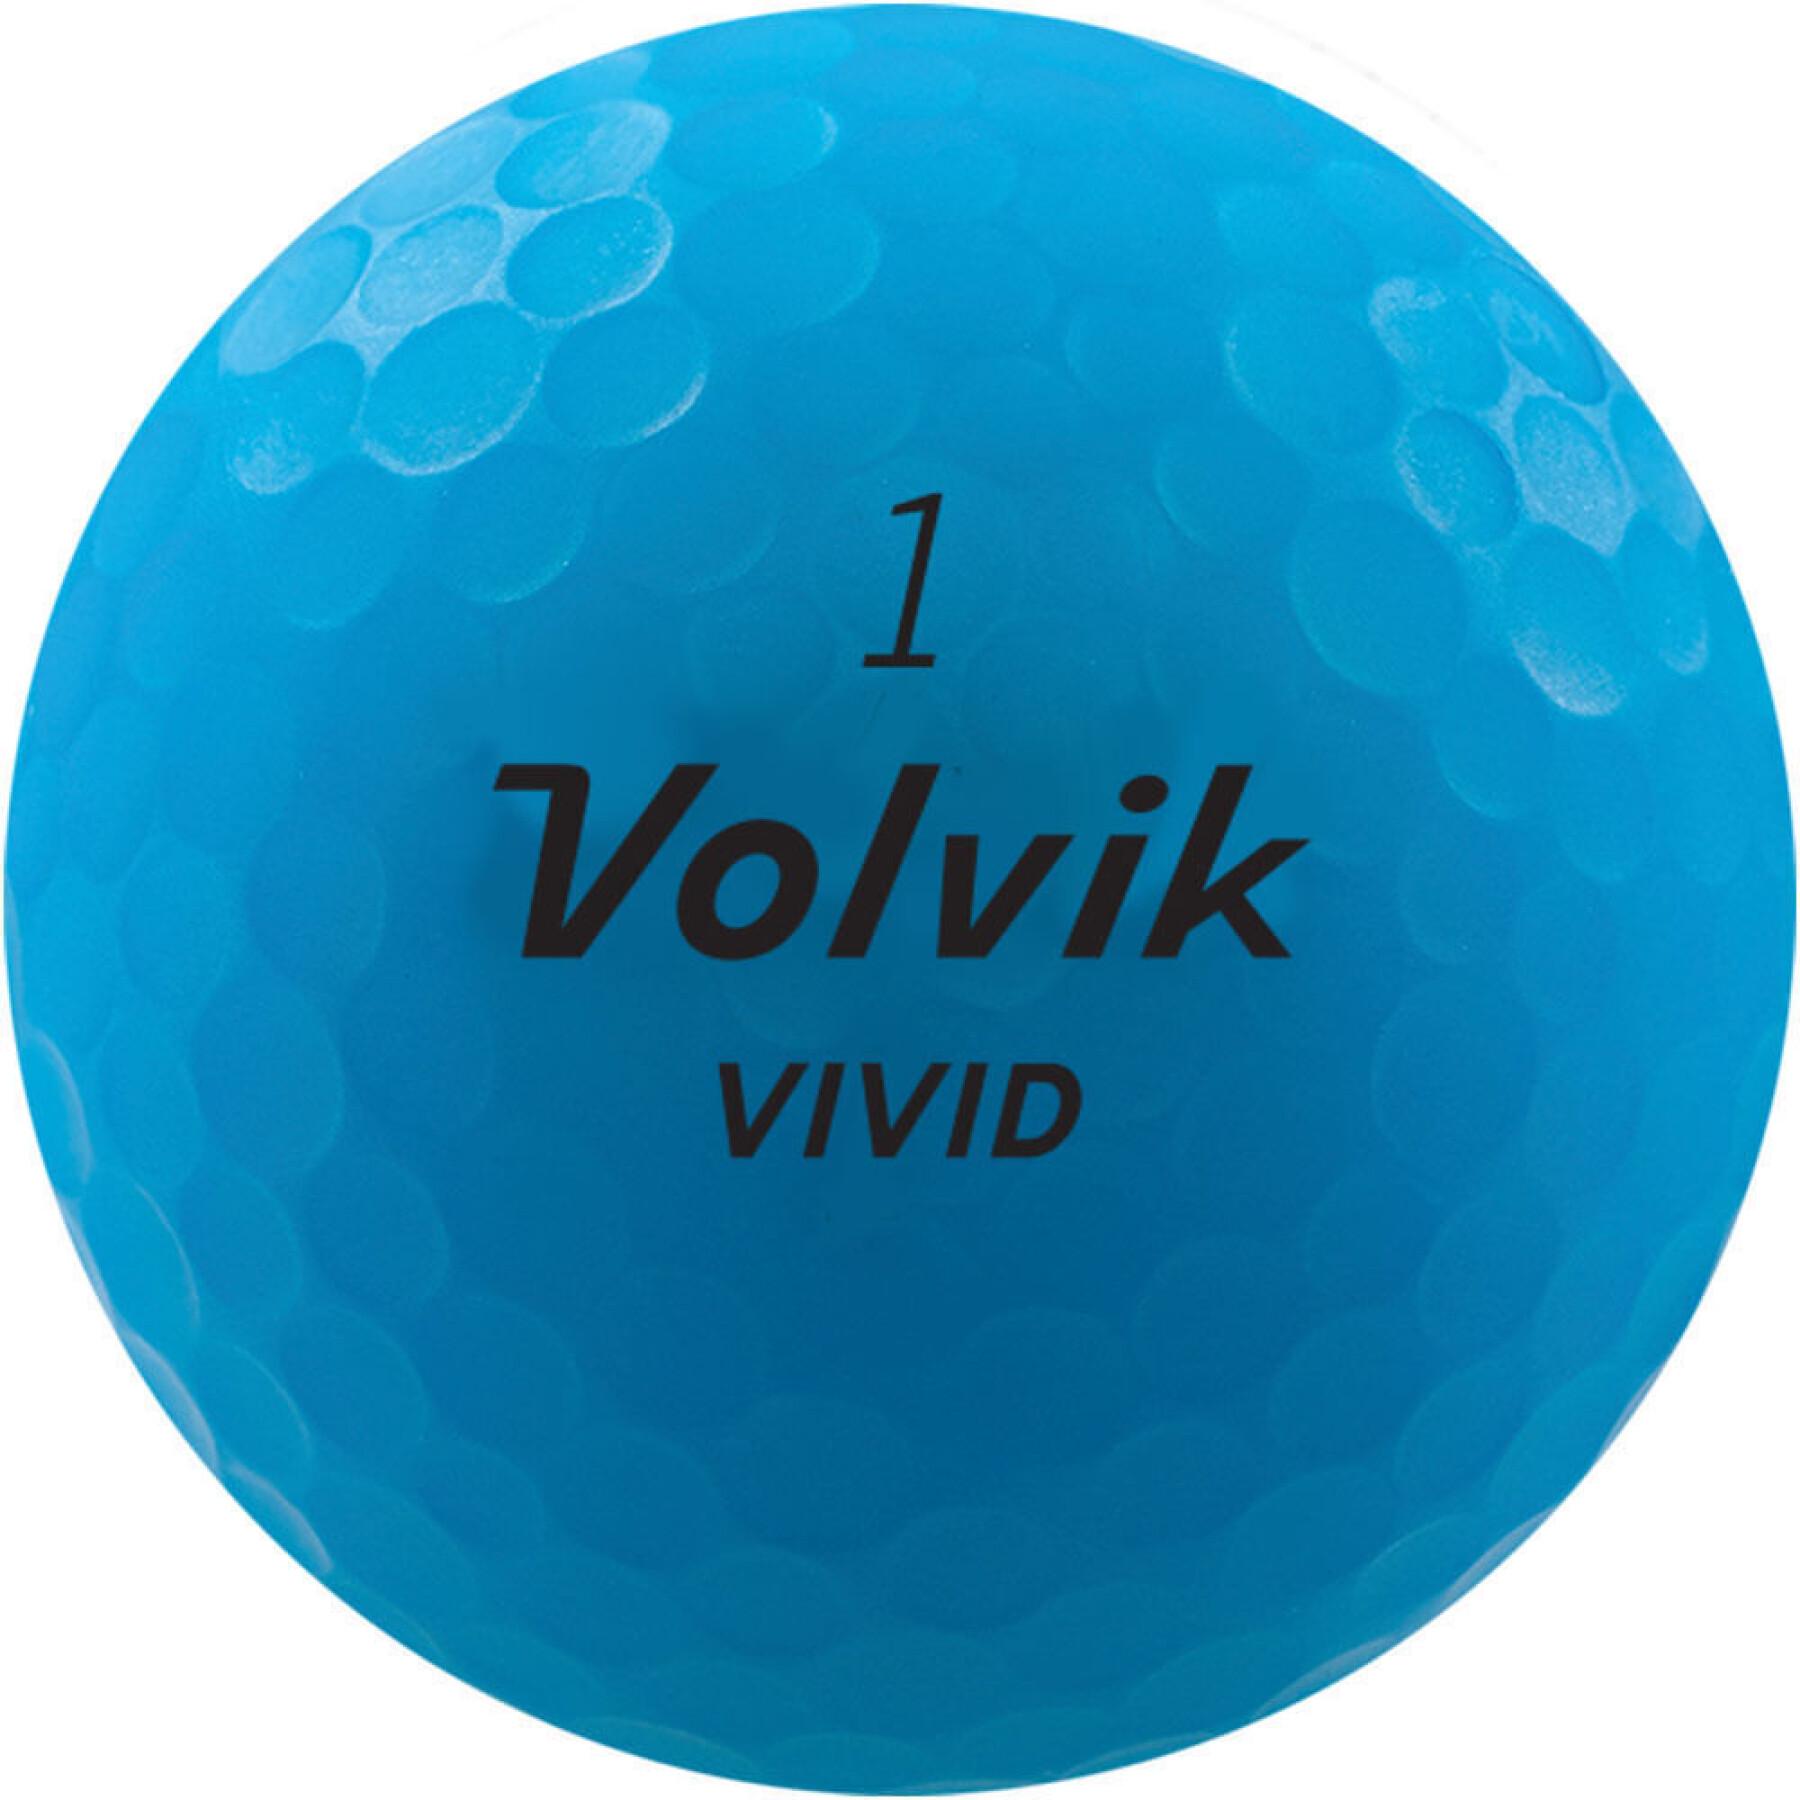 Pacote de 12 bolas de golfe Volvik Vivid